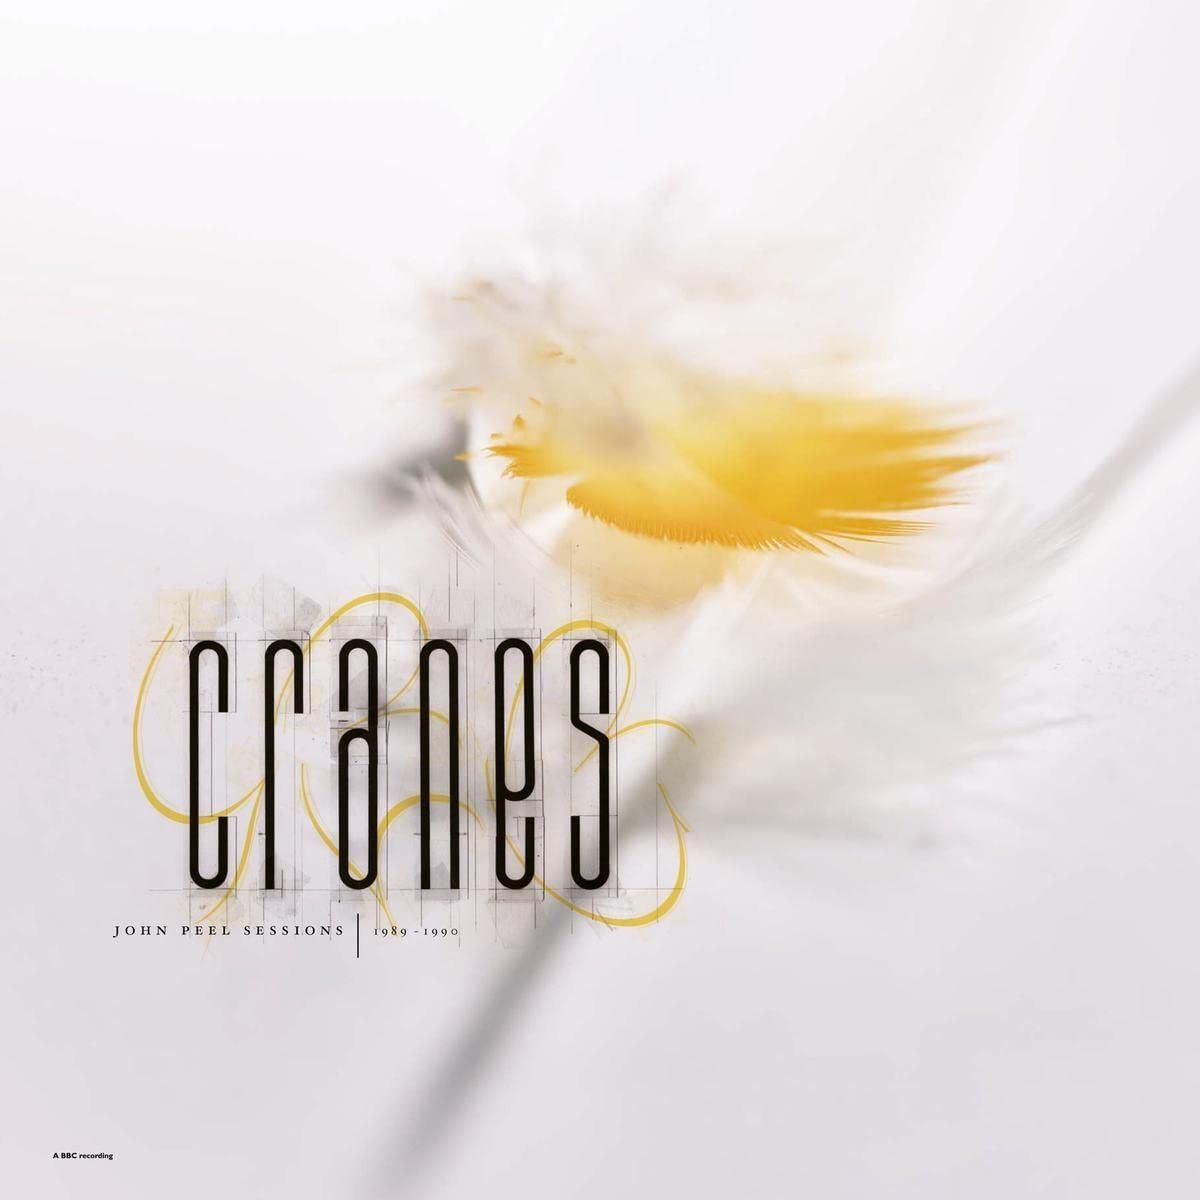 CRANES / クレインズ / JOHN PEEL SESSIONS (1989-1990) (CD)